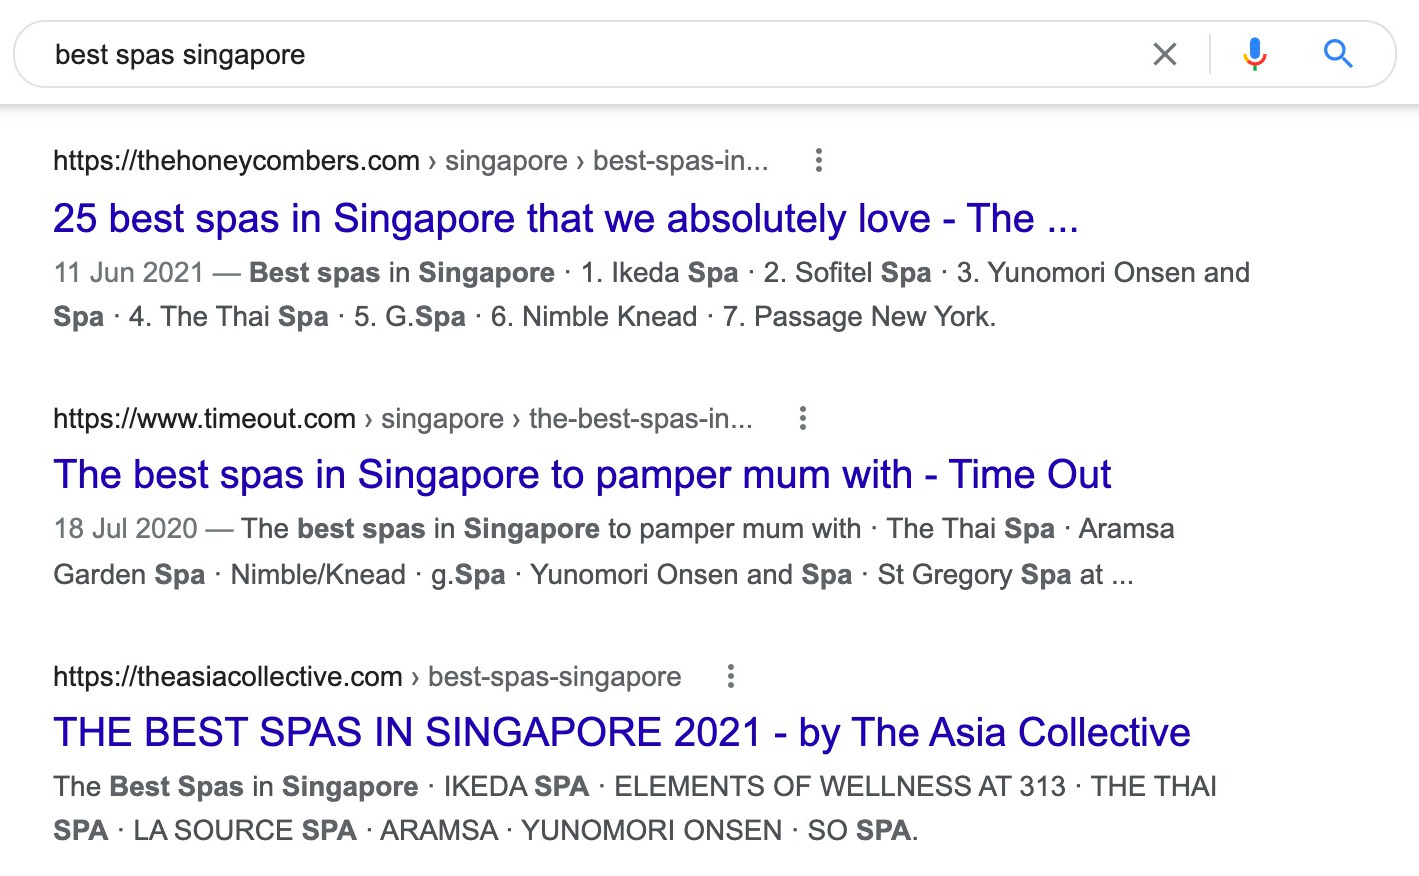 Google SERP of "best spas singapore"